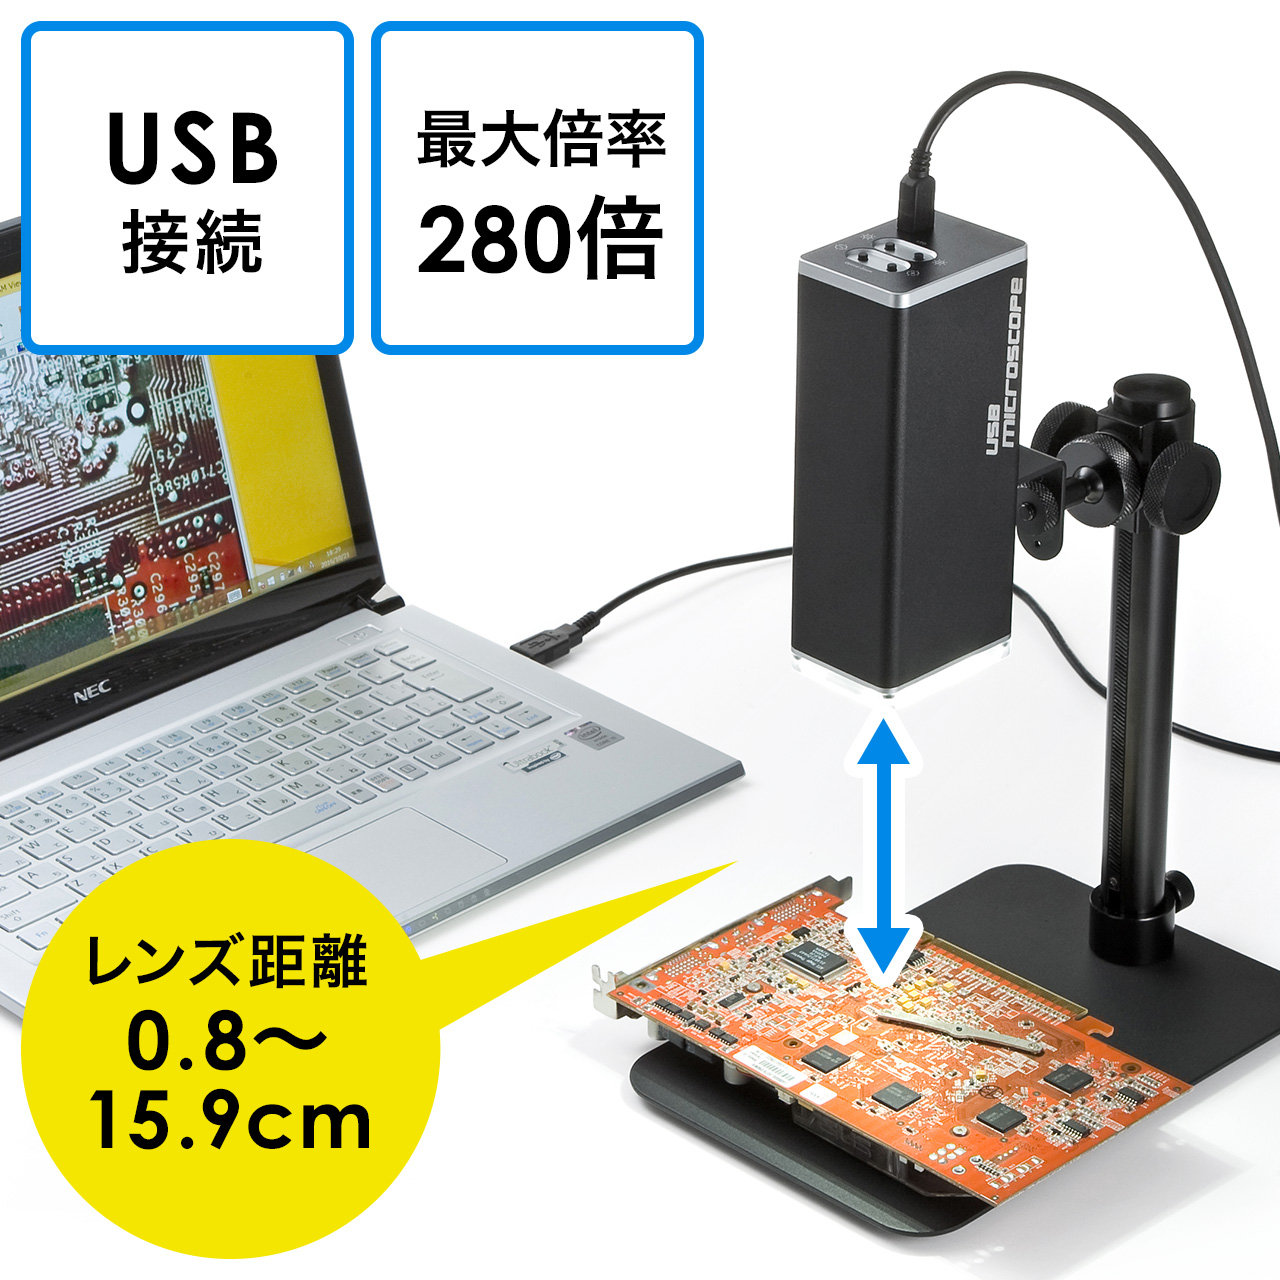 USBデジタル顕微鏡 マイクロスコープ 高倍率 最大280倍 高画質 オートフォーカス 専用ソフト付｜サンプル無料貸出対応 400-CAM058 サンワダイレクト